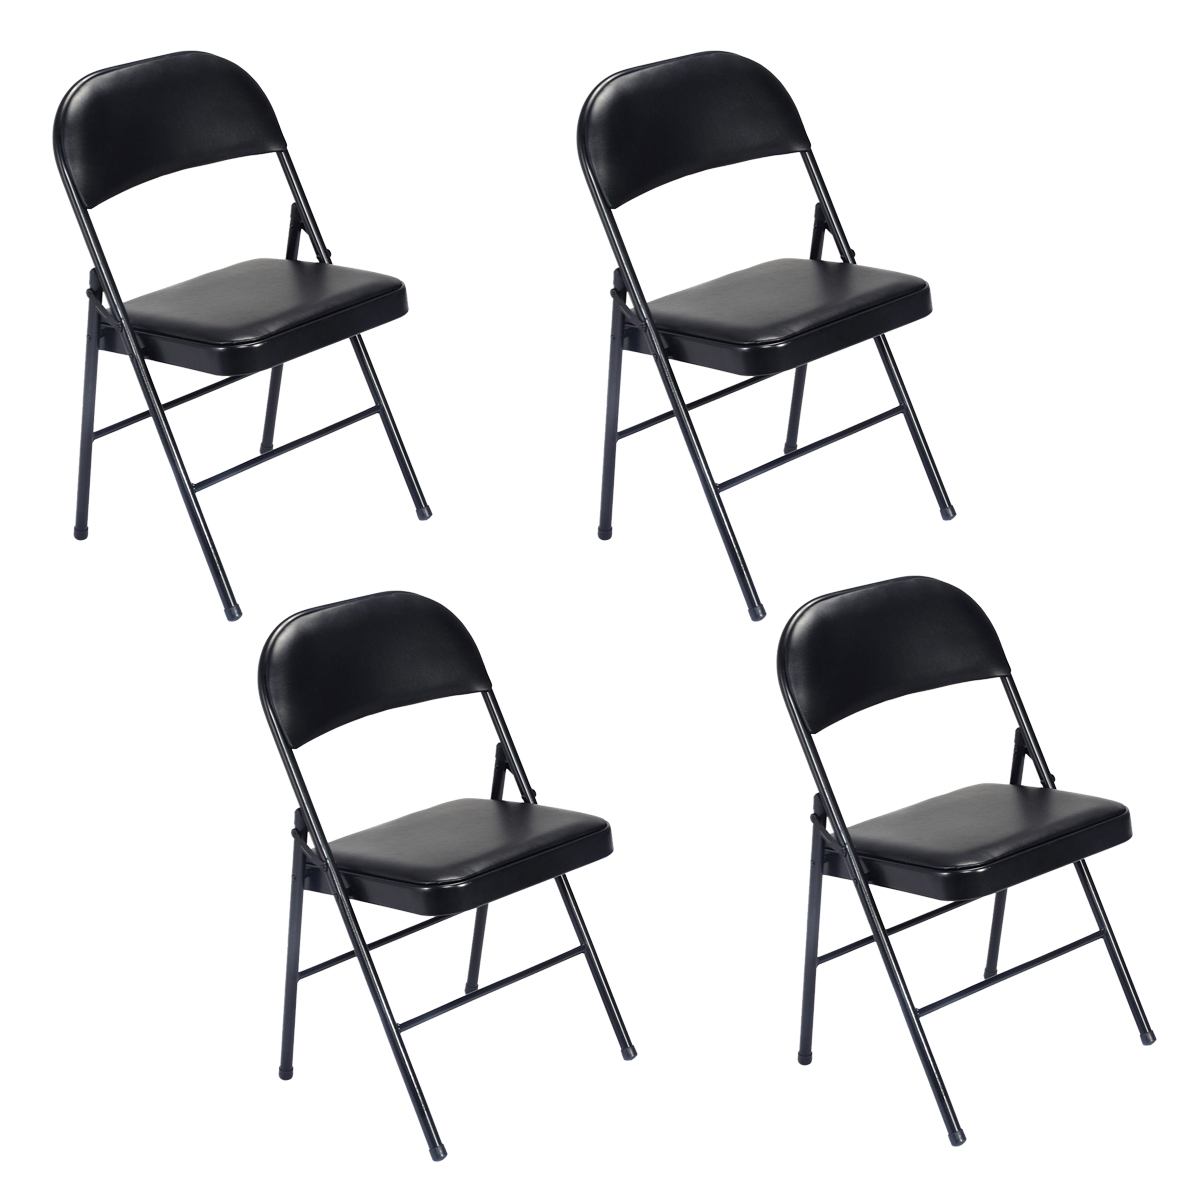 UbesGoo Set of 4 Fabric Upholstered Padded Seat Metal Frame Folding Chair Portable Black - image 1 of 8